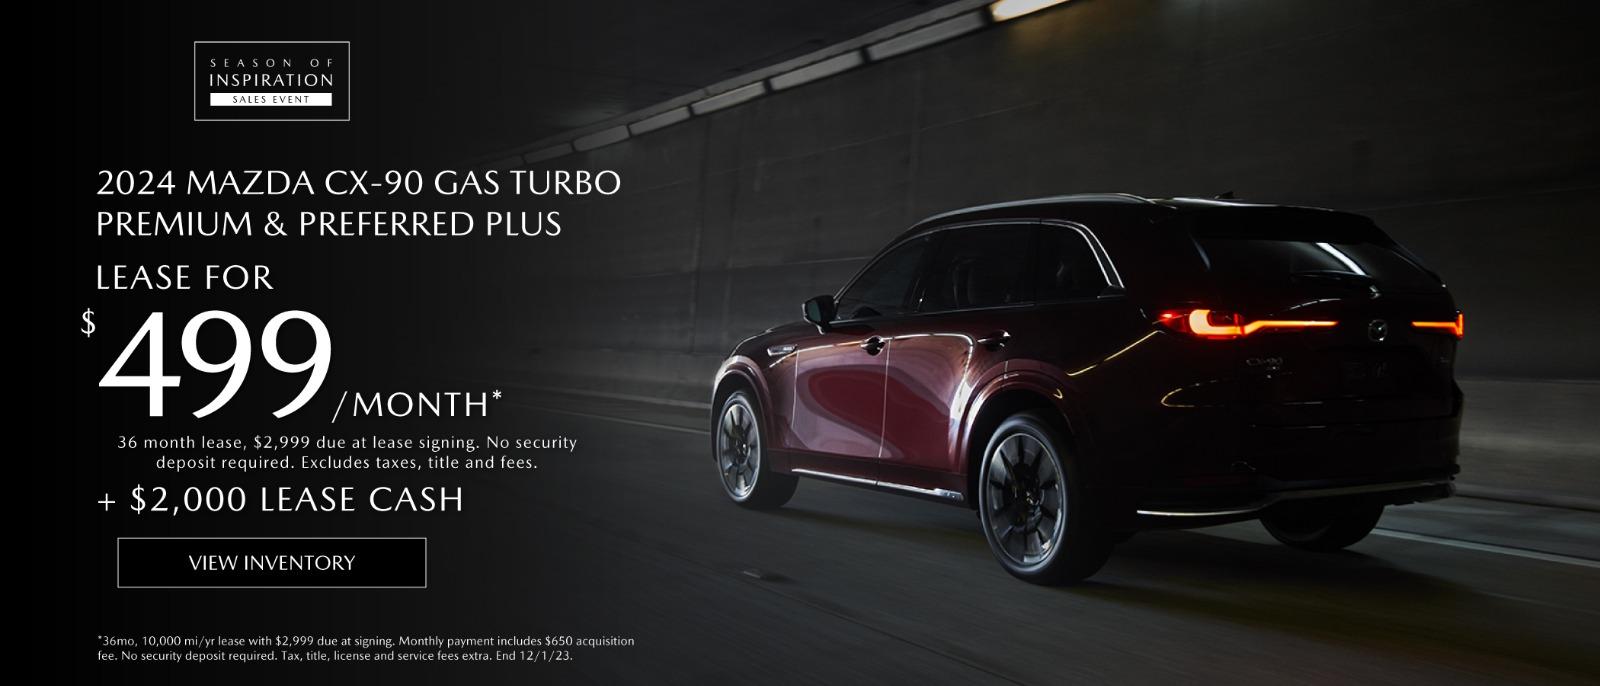 2024 Mazda CX-90 Gas Turbo Premium Preferred plus Lease for $499 per month for 30 months